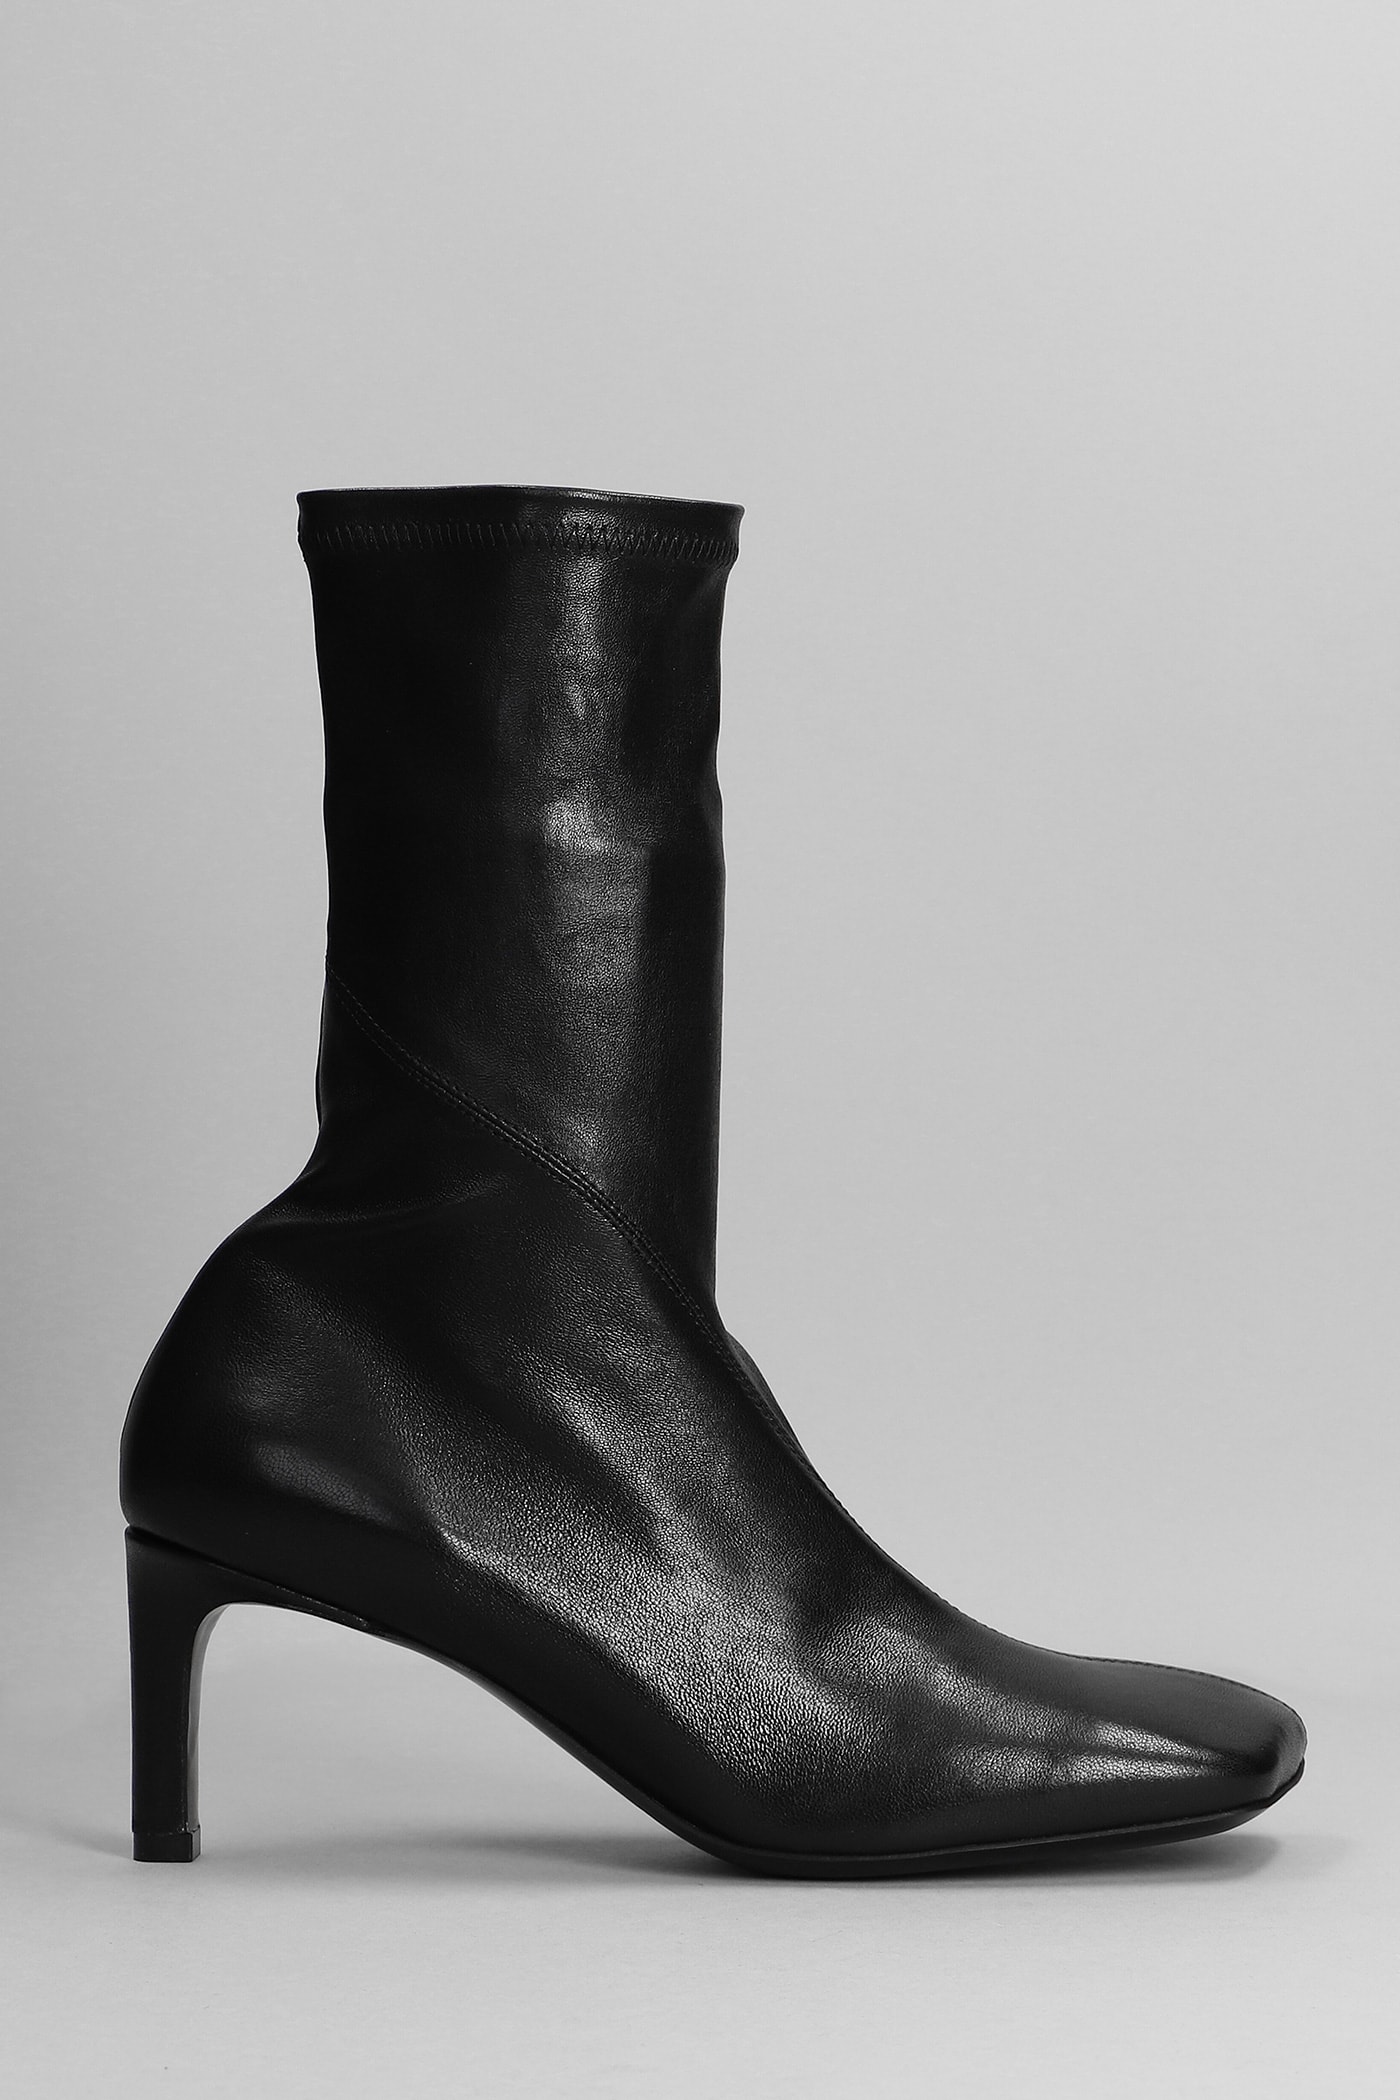 Jil Sander High Heels Ankle Boots In Black Leather